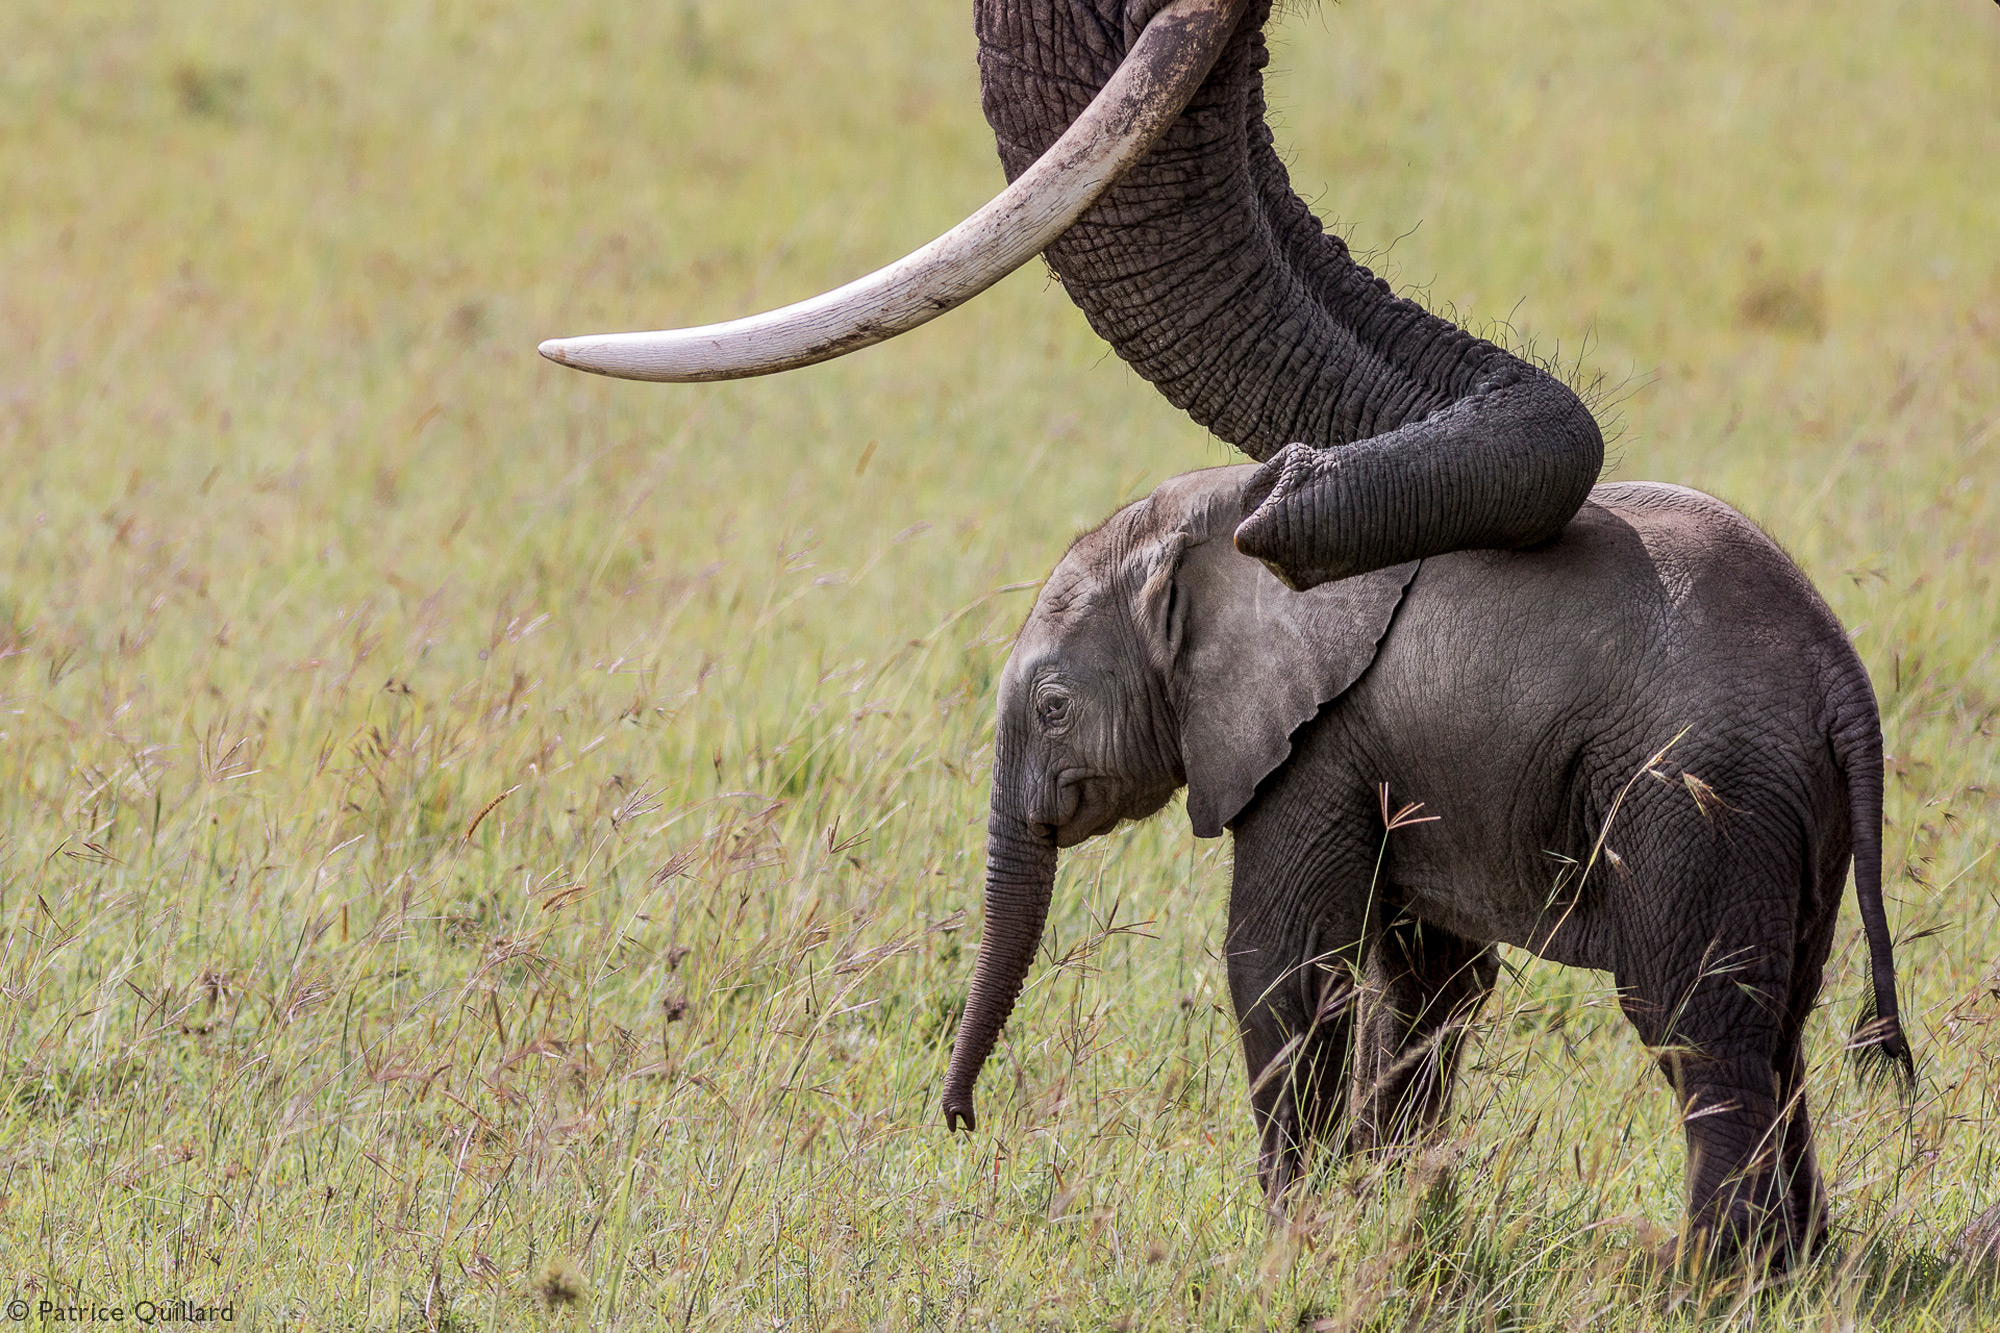 An elephant calf in Maasai Mara National Reserve, Kenya